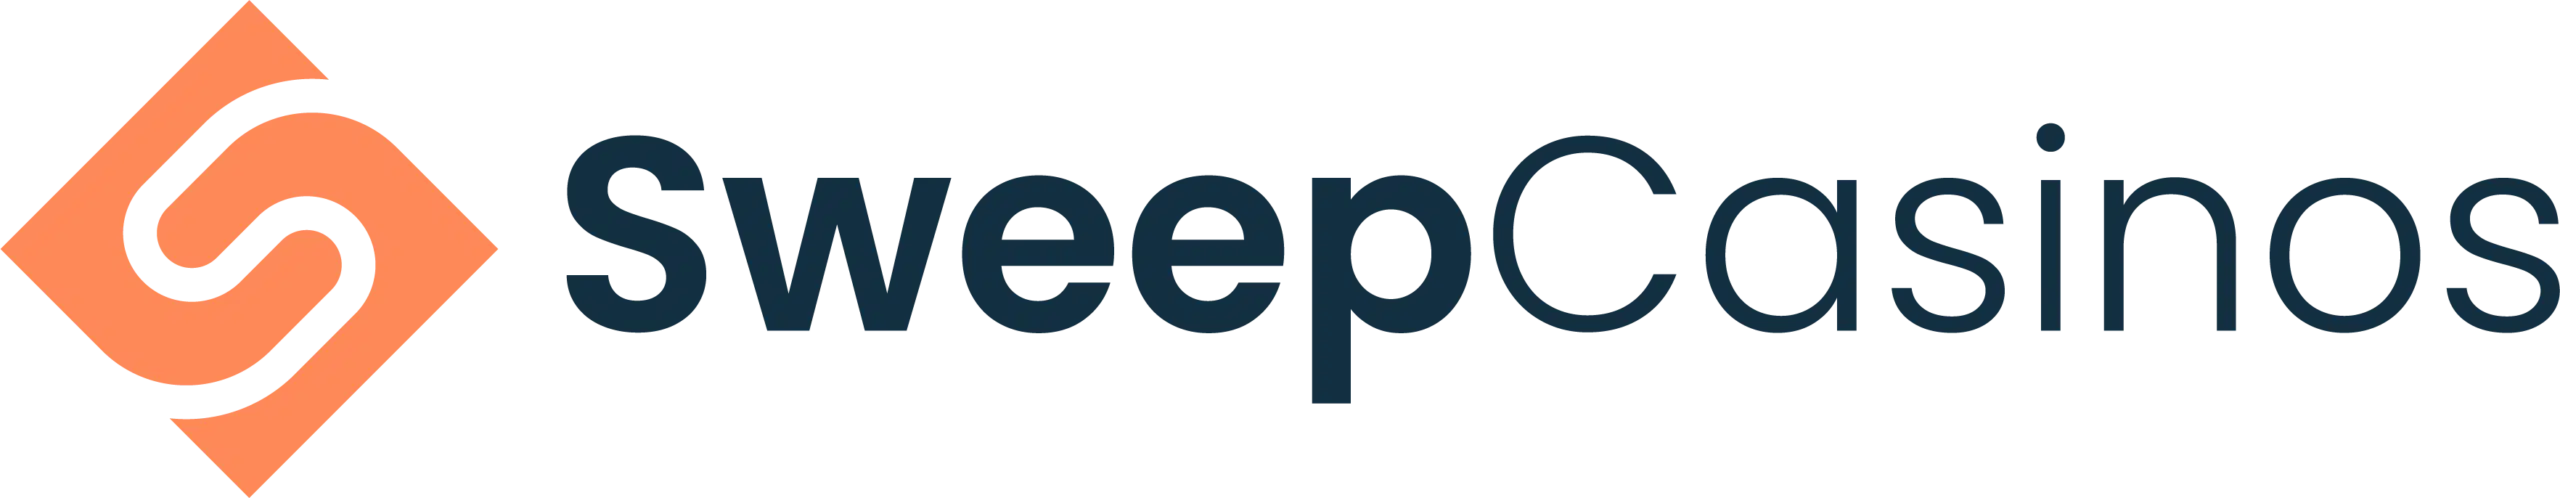 SweepCasinos Logo Dark Text Transparent Background